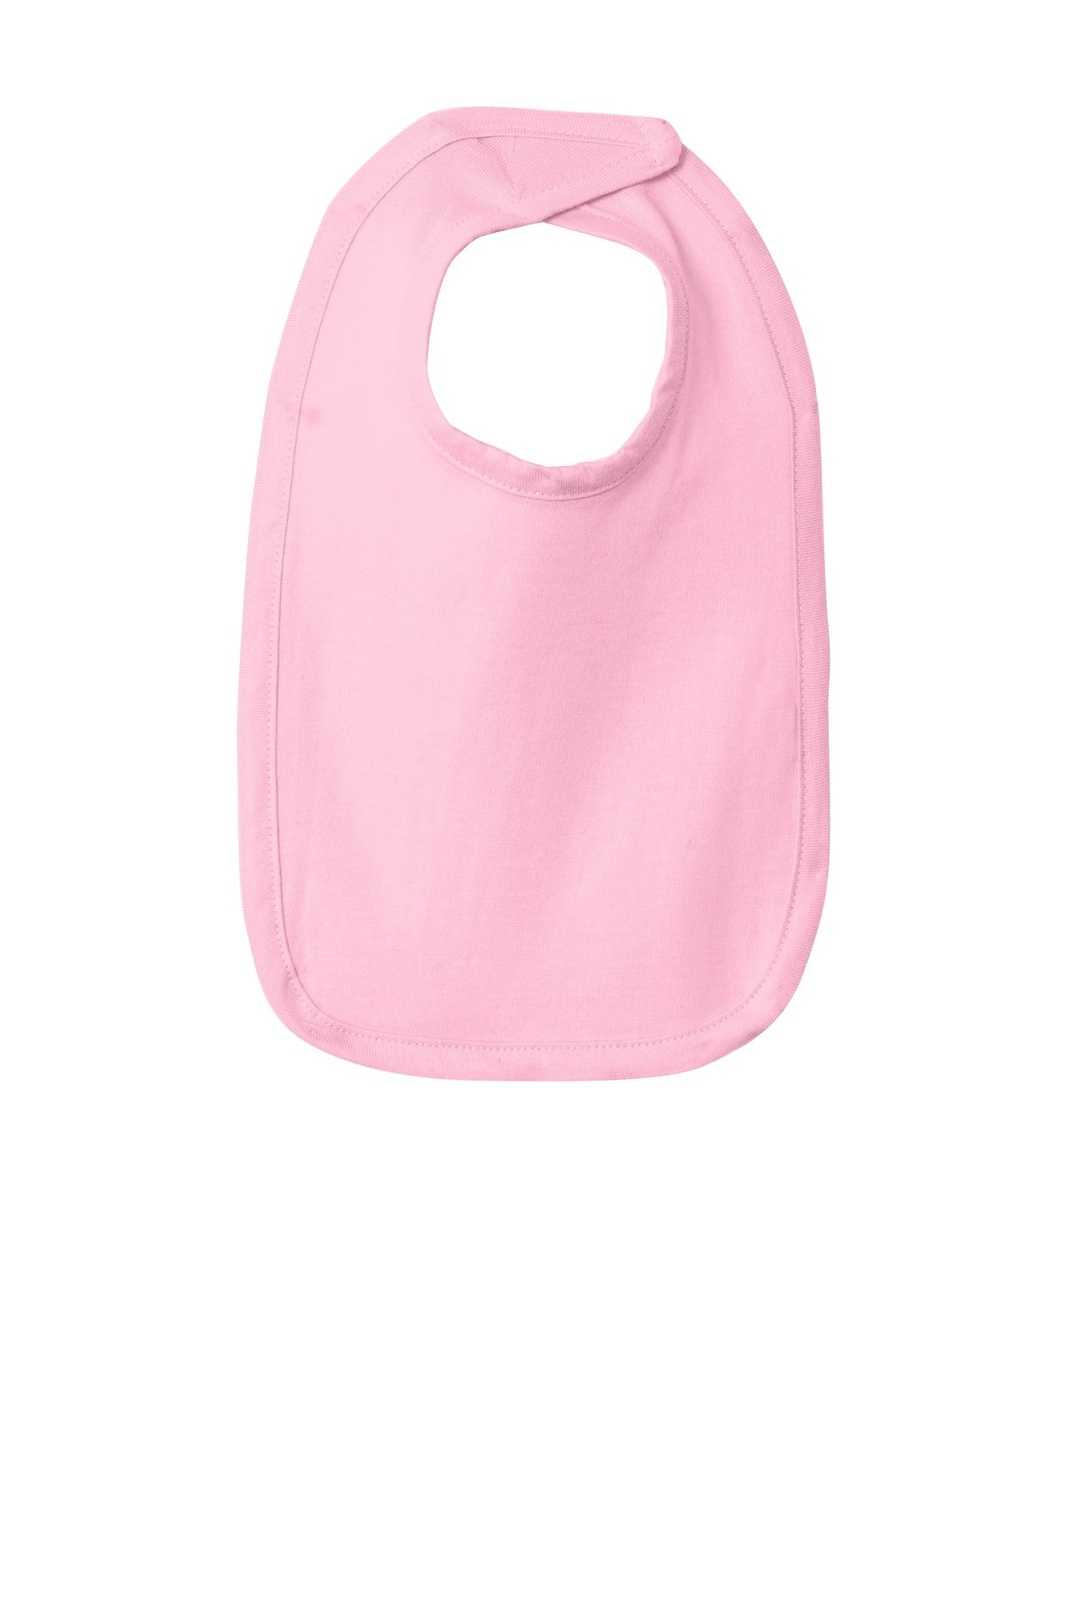 Rabbit Skins 1005 Infant Premium Jersey Bib - Pink - HIT a Double